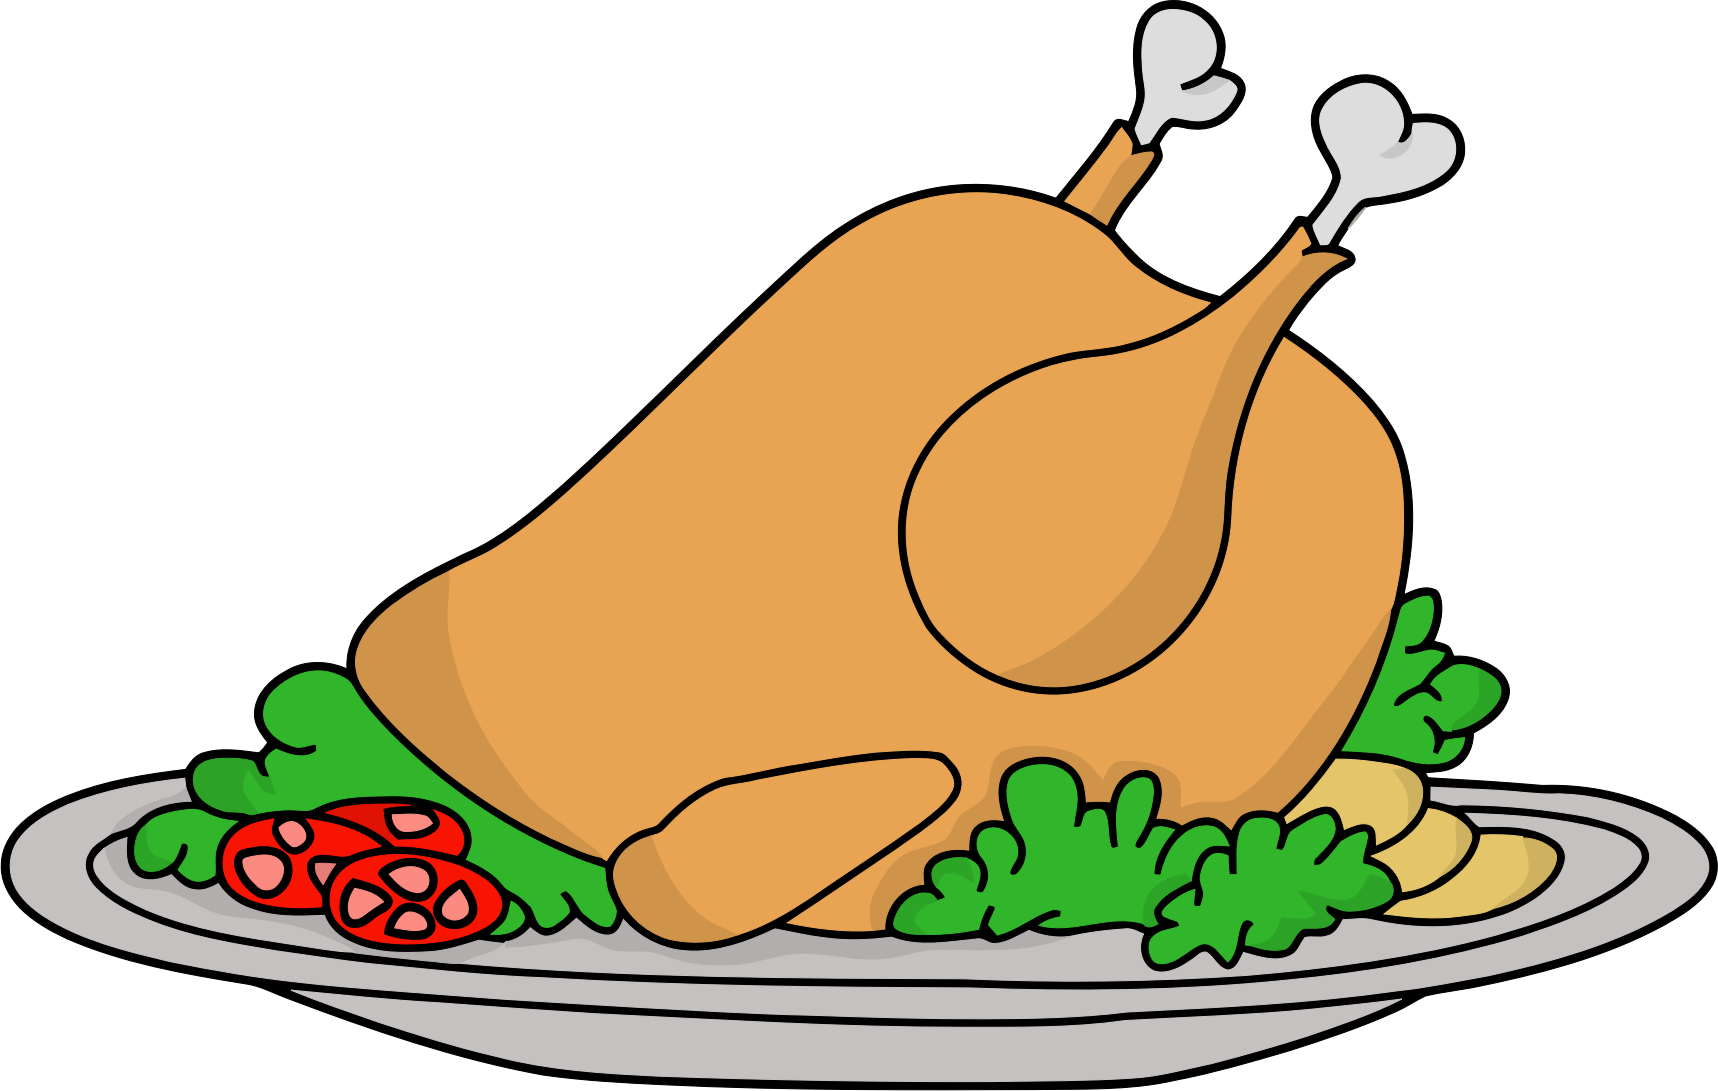 Oven-roasted Turkey On A Platter By Jonathan357 - Turkey On A Platter Clip Art (1718x1091)